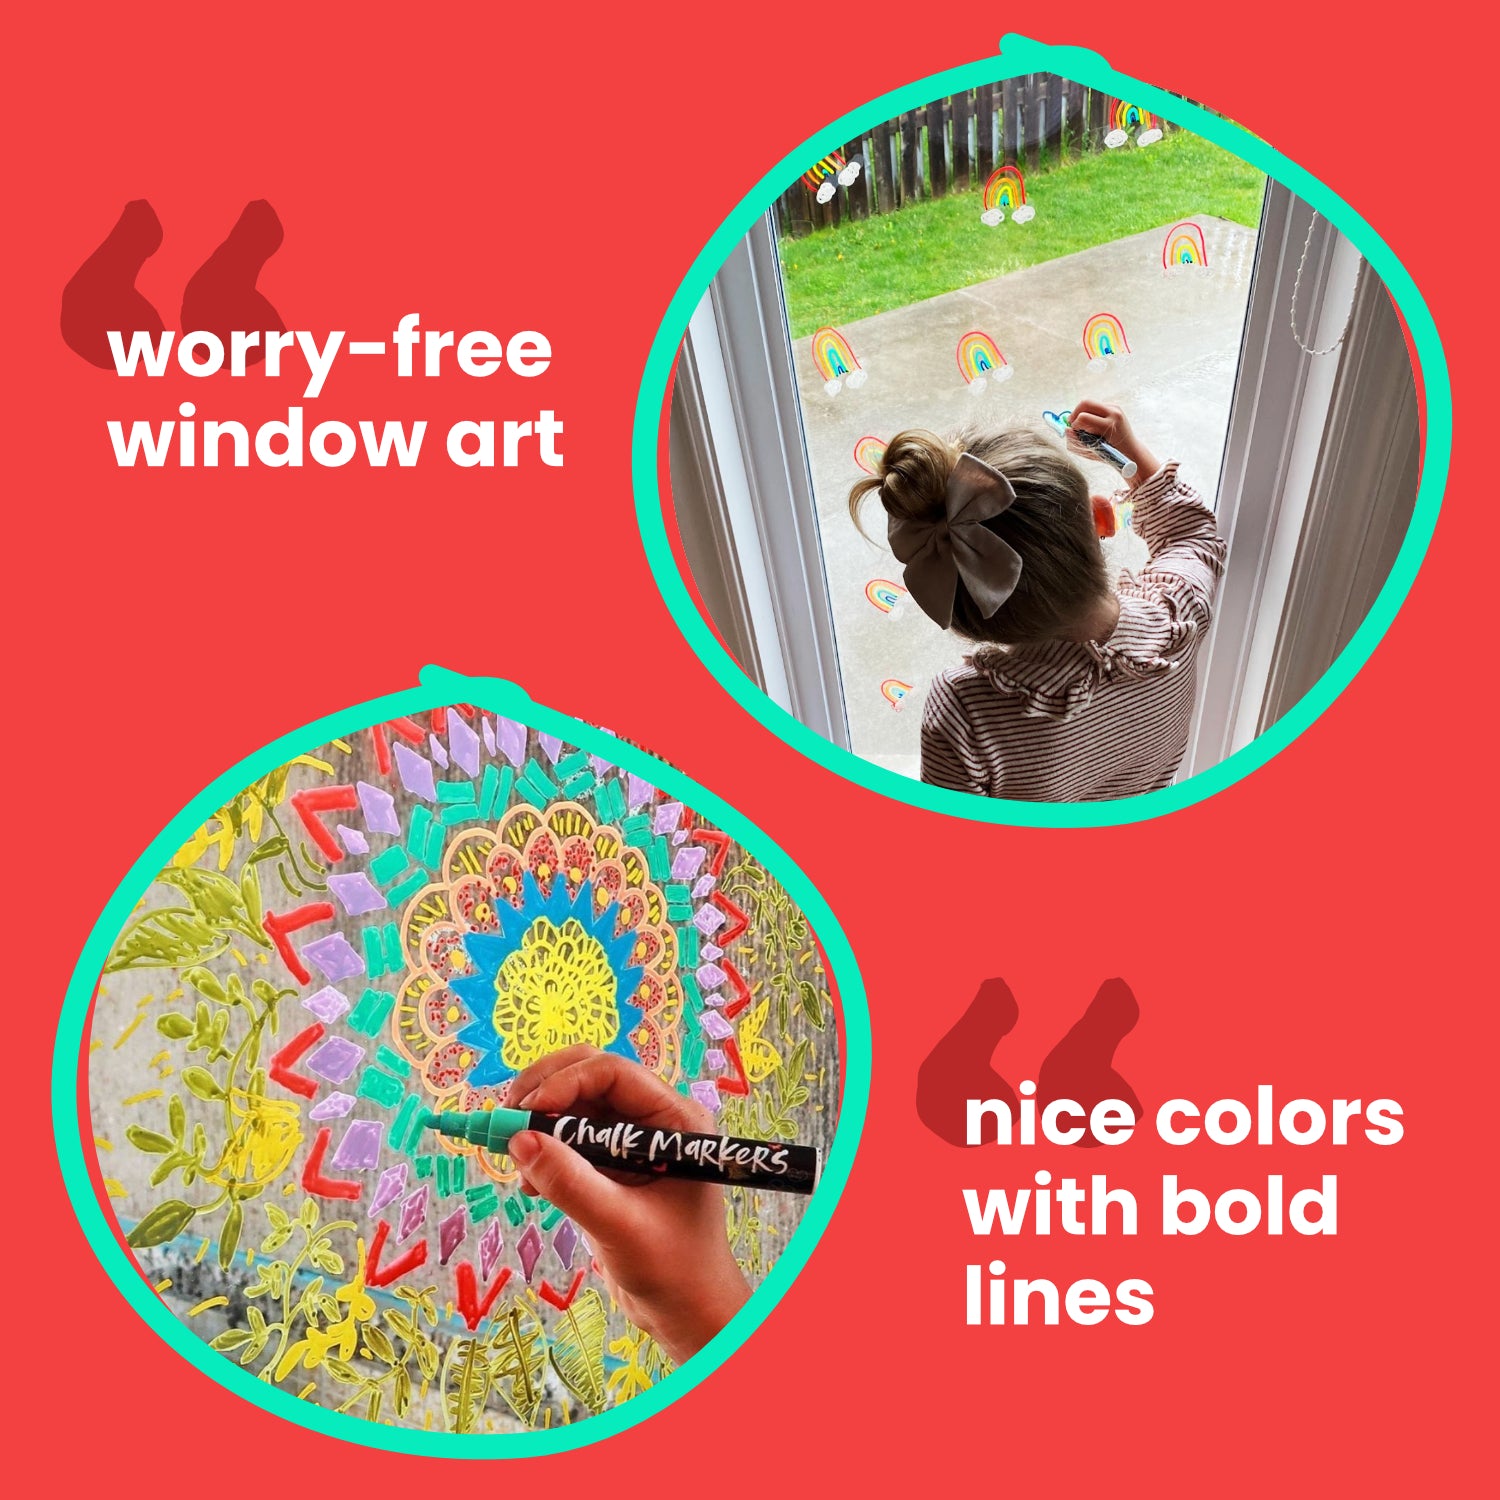 Window Chalk Markers 15mm Nib - Neon & Metallic Colors - Chalkola Art Supply